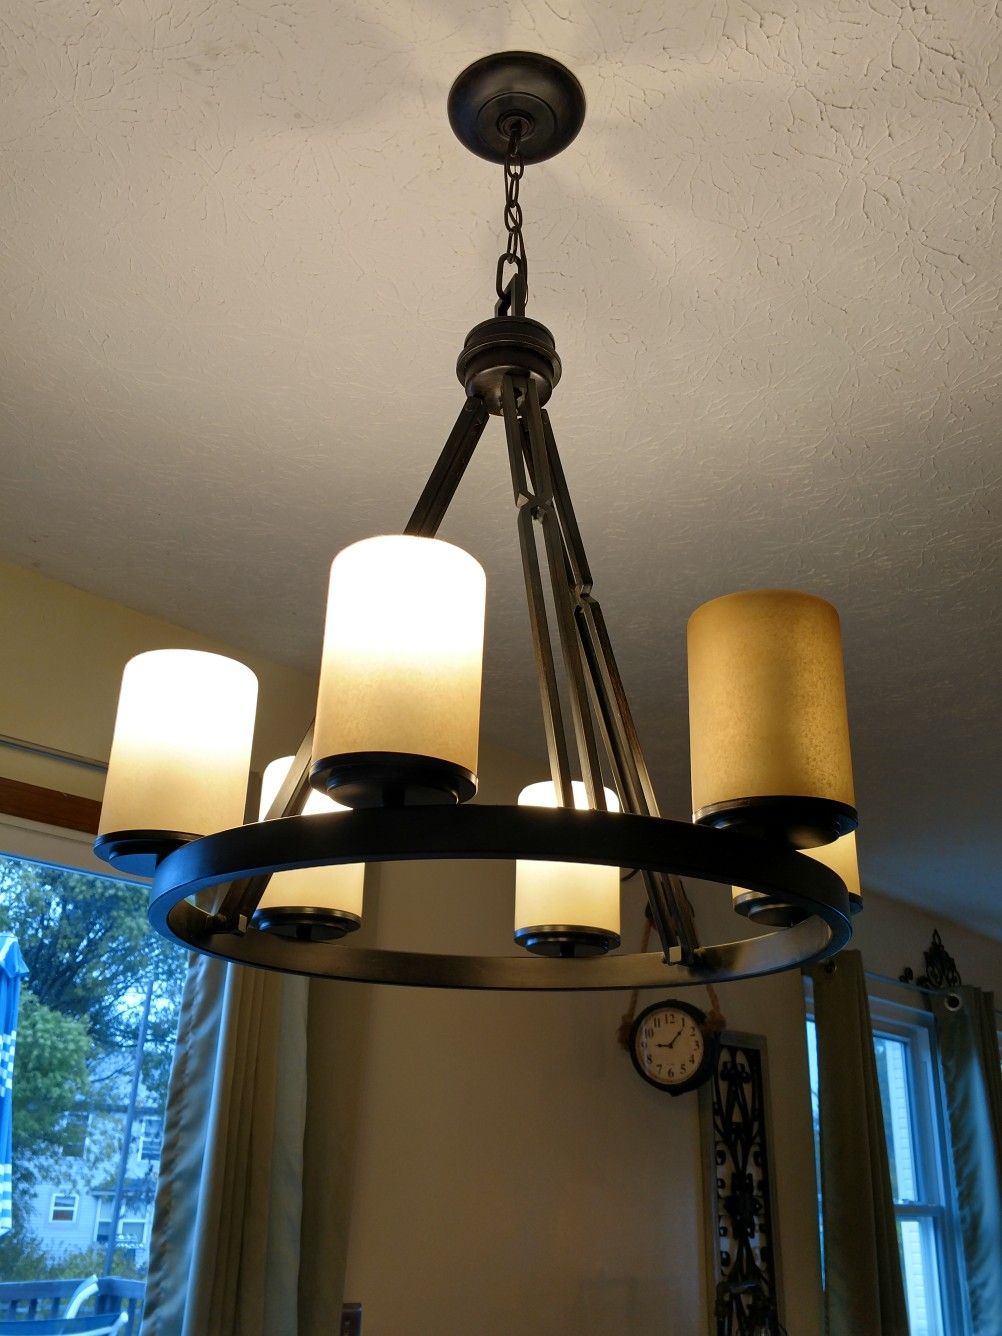 Rustic lighting- six lamps